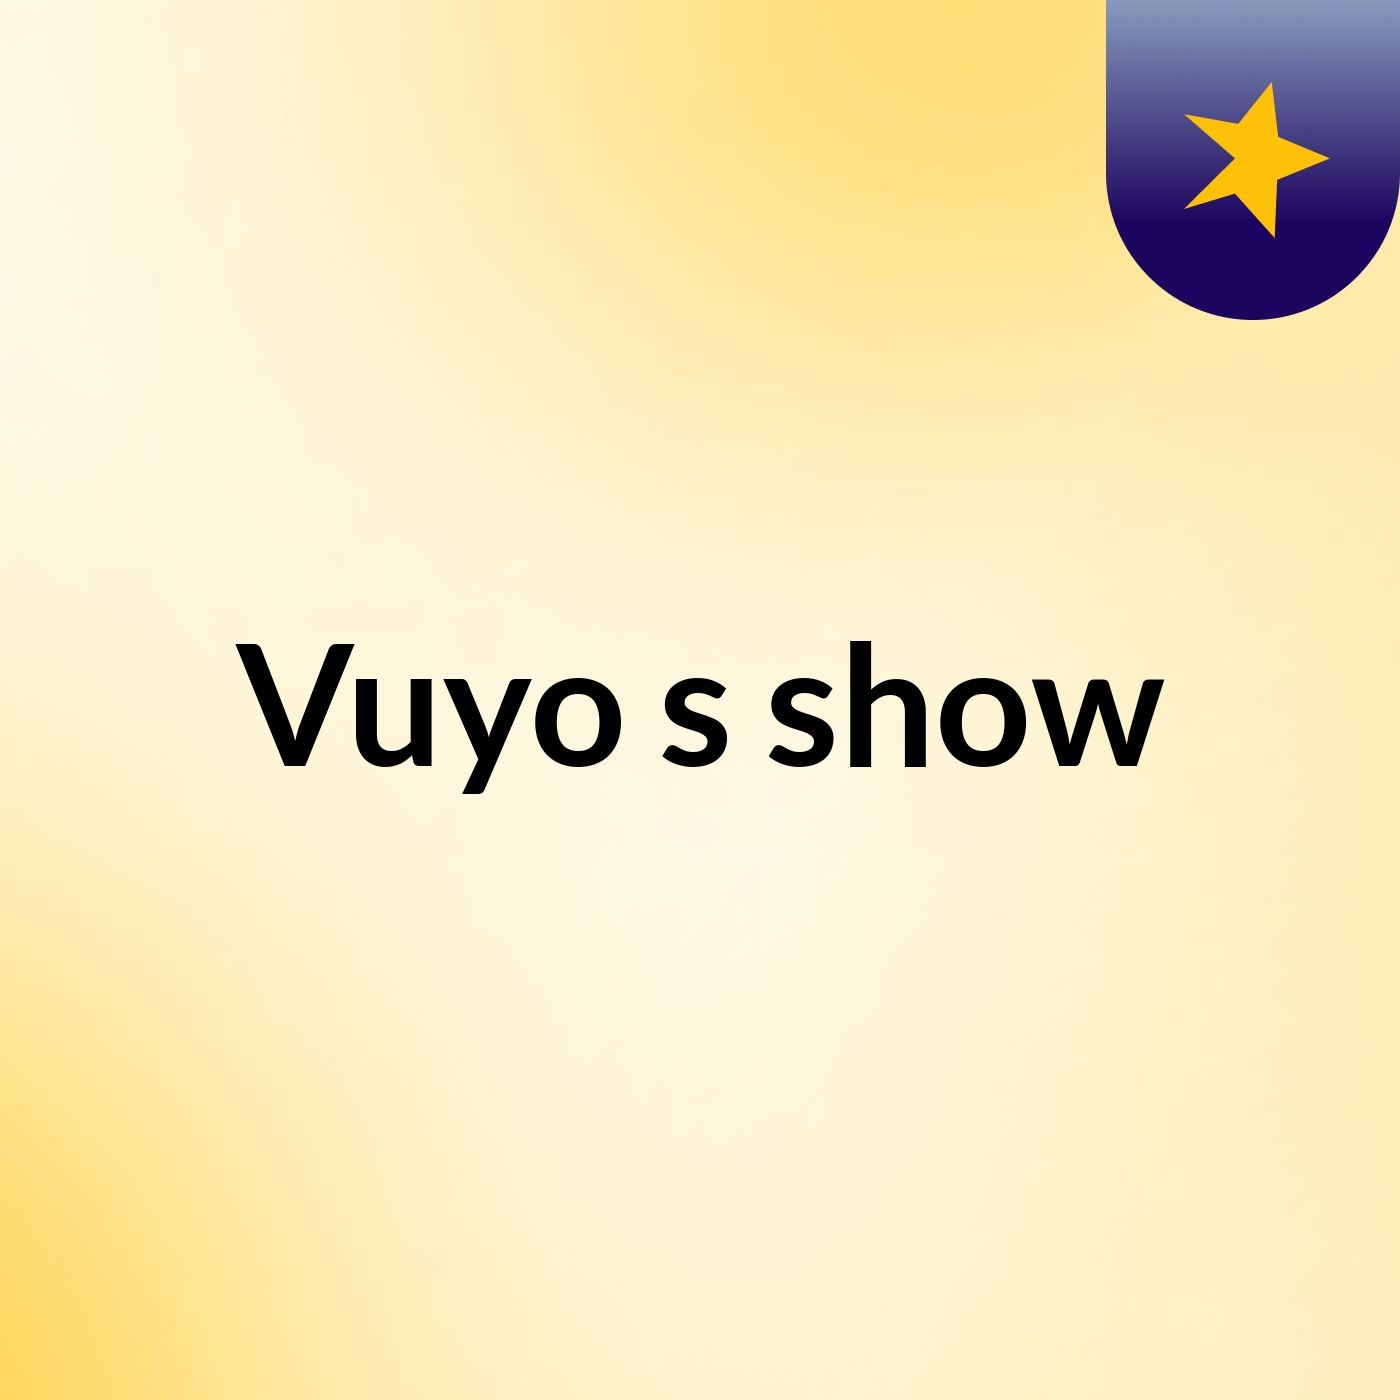 Vuyo's show